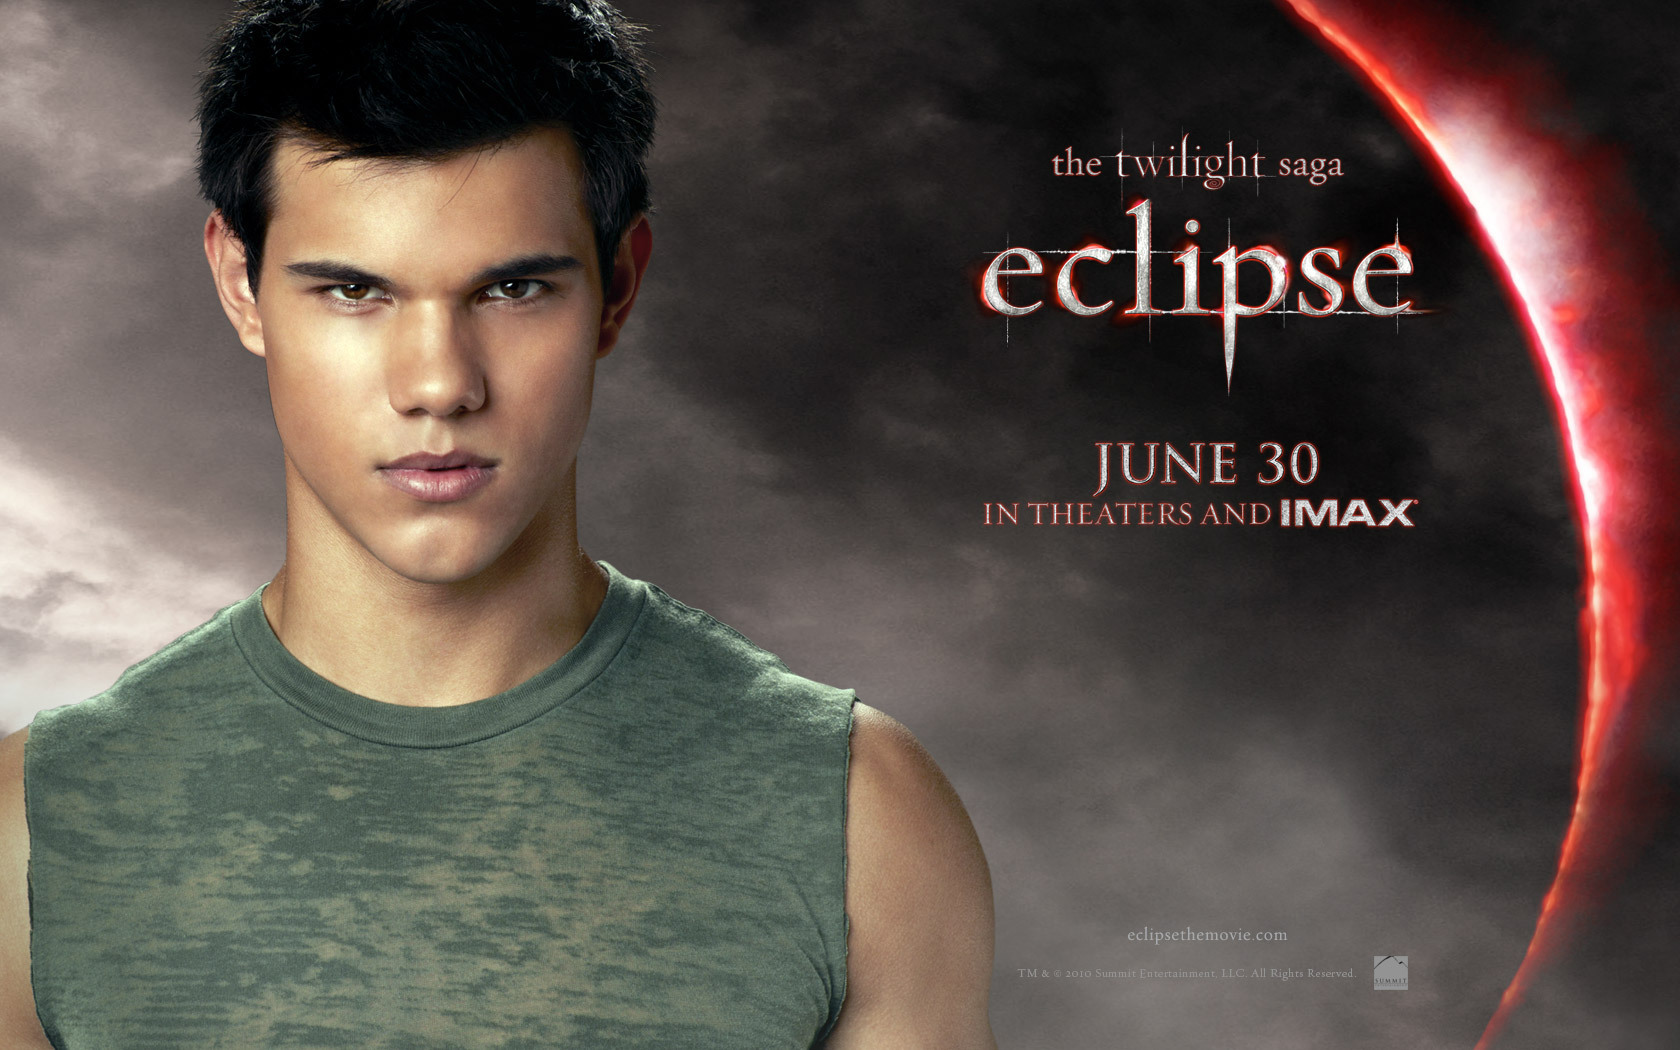 Taylor Lautner Twilight Saga Eclipse Series